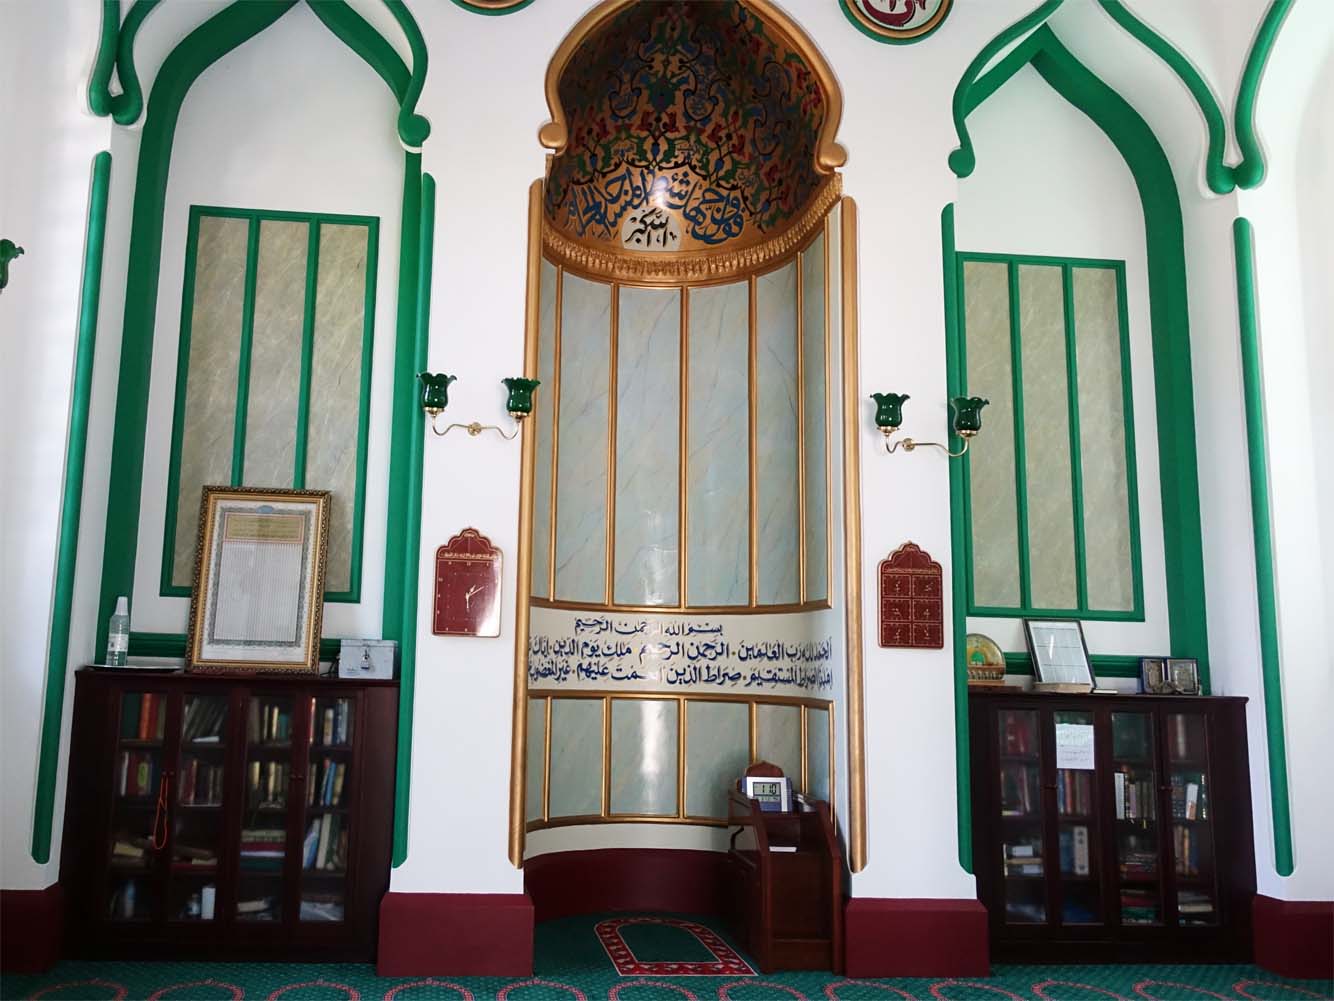 Картинки по запросу shah jahan mosque uk